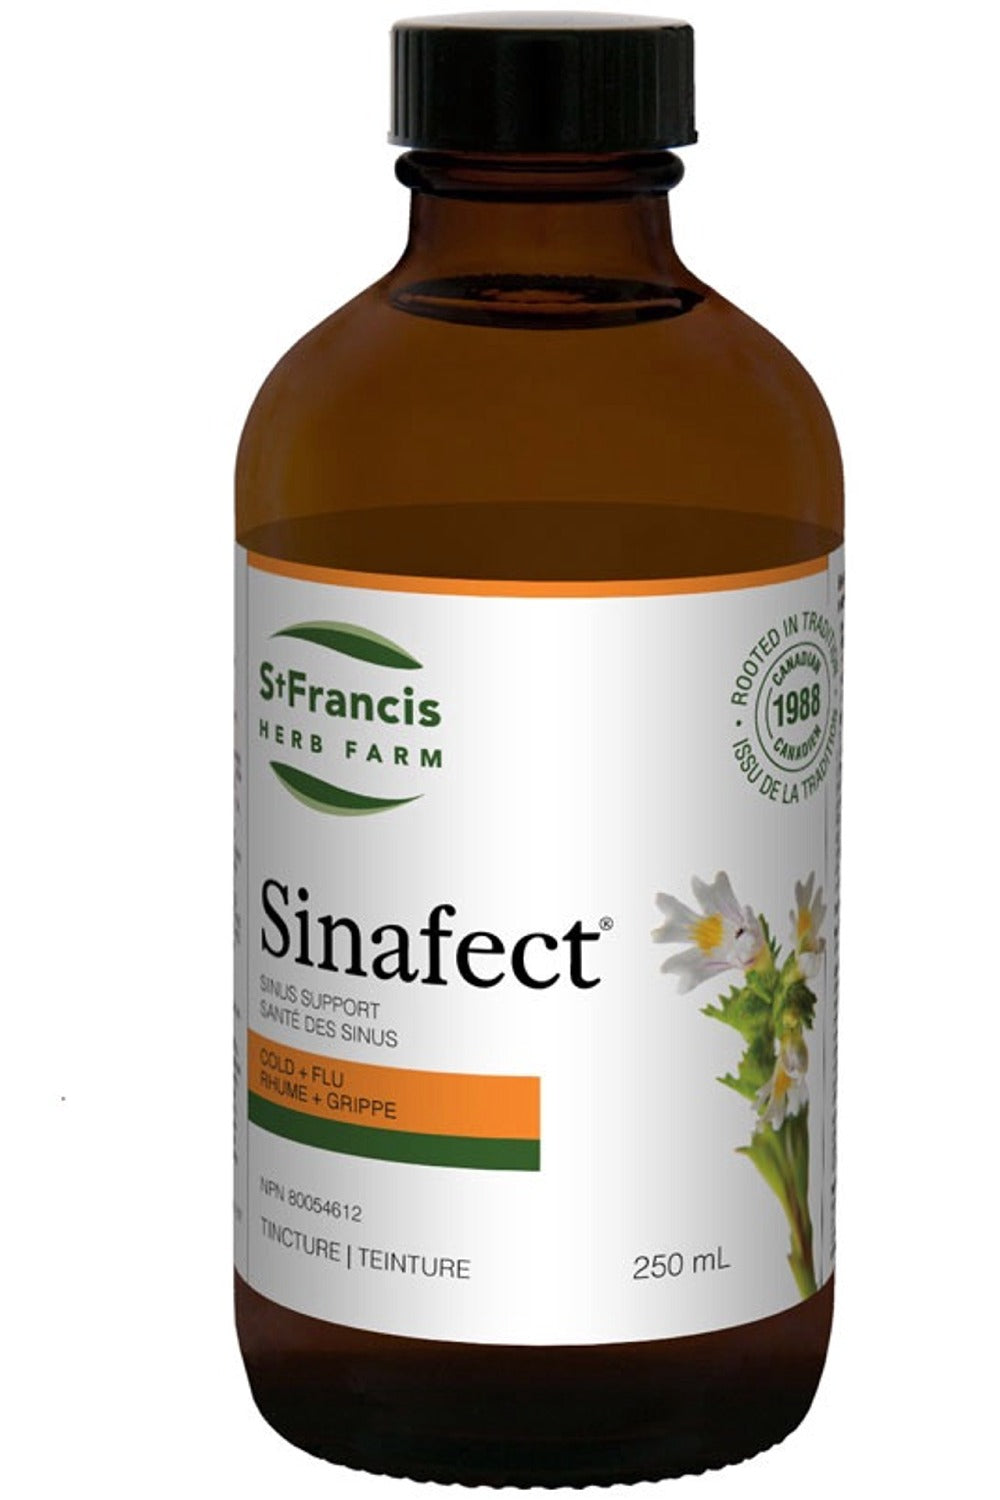 ST FRANCIS HERB FARM Sinafect (250 ml)